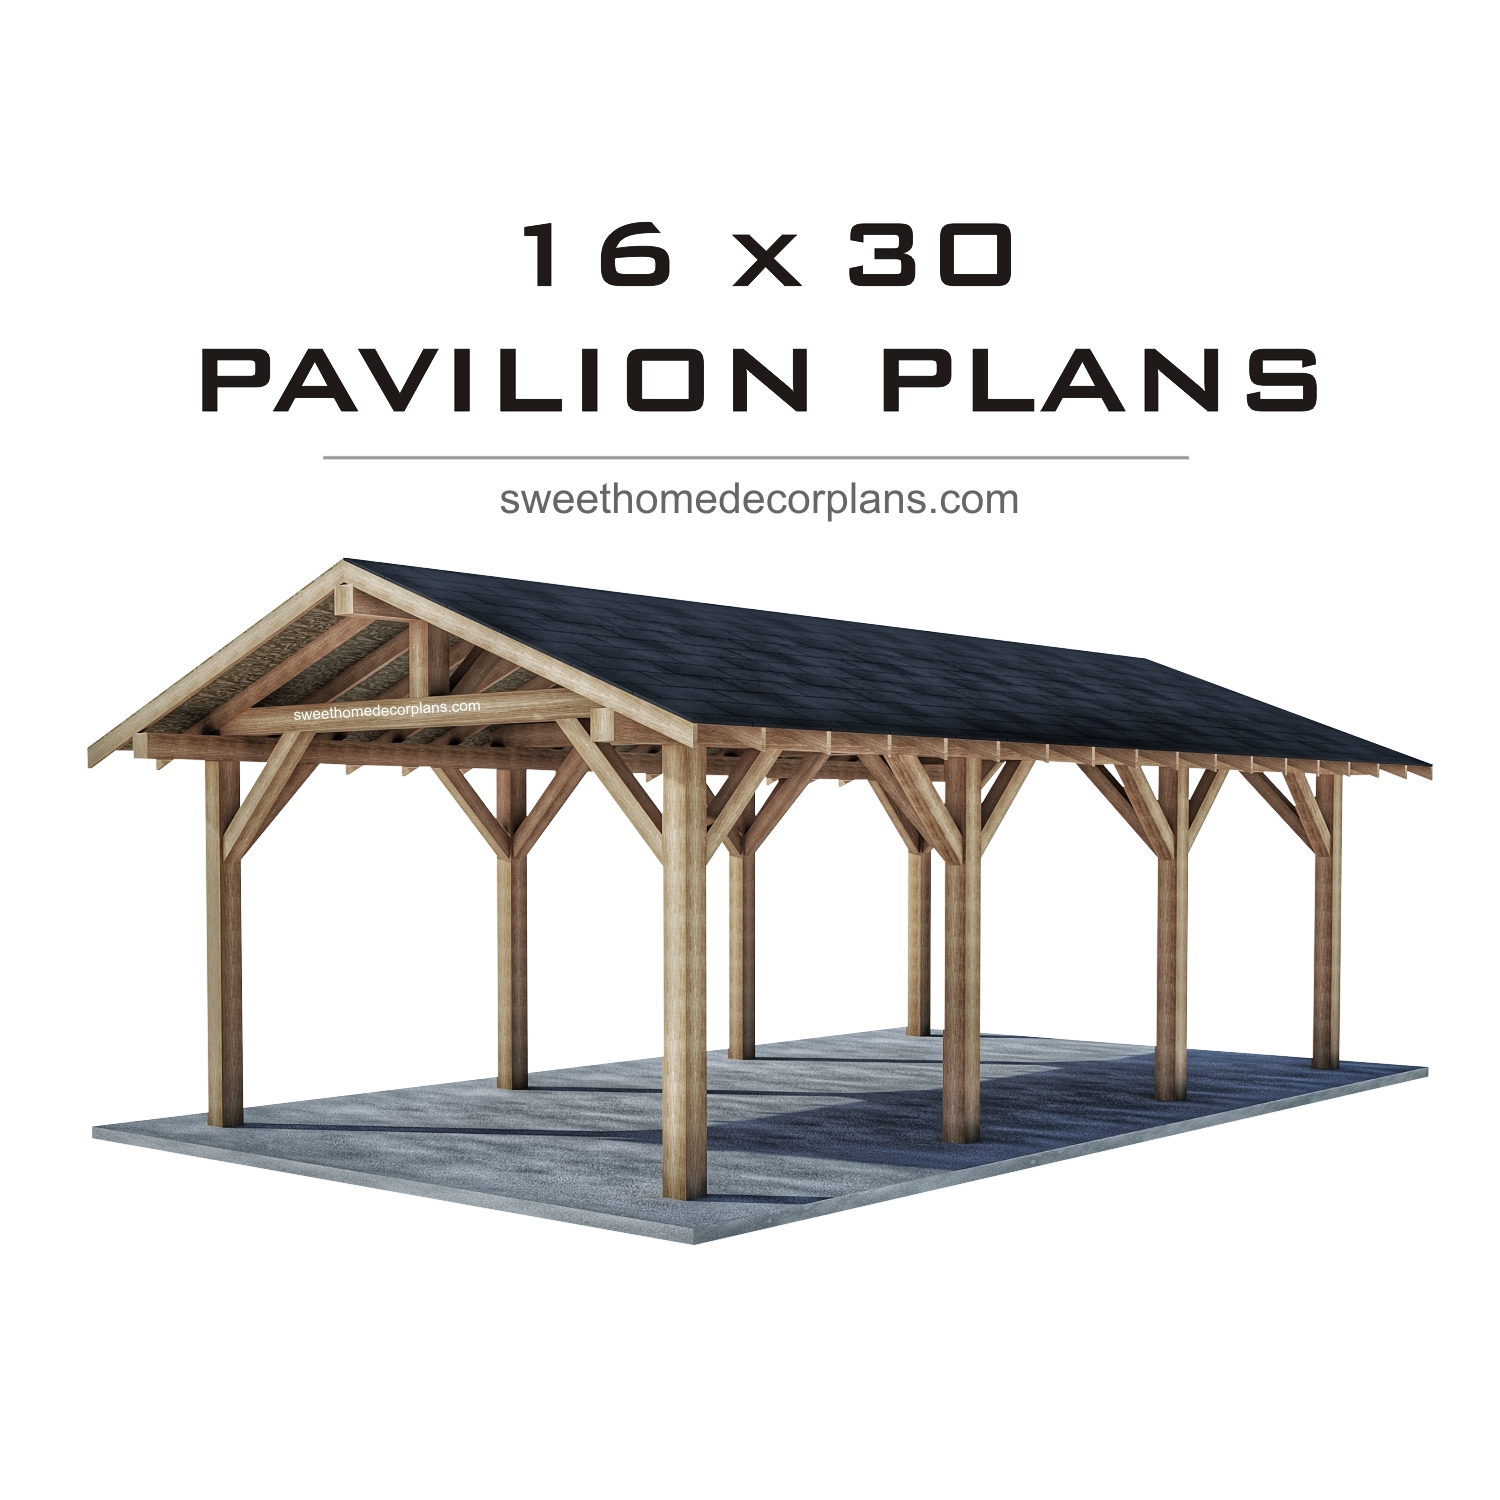 Diy-wooden-Diy-16-х-30-gable-pavilion-plans-carport-plans-for-outdoor